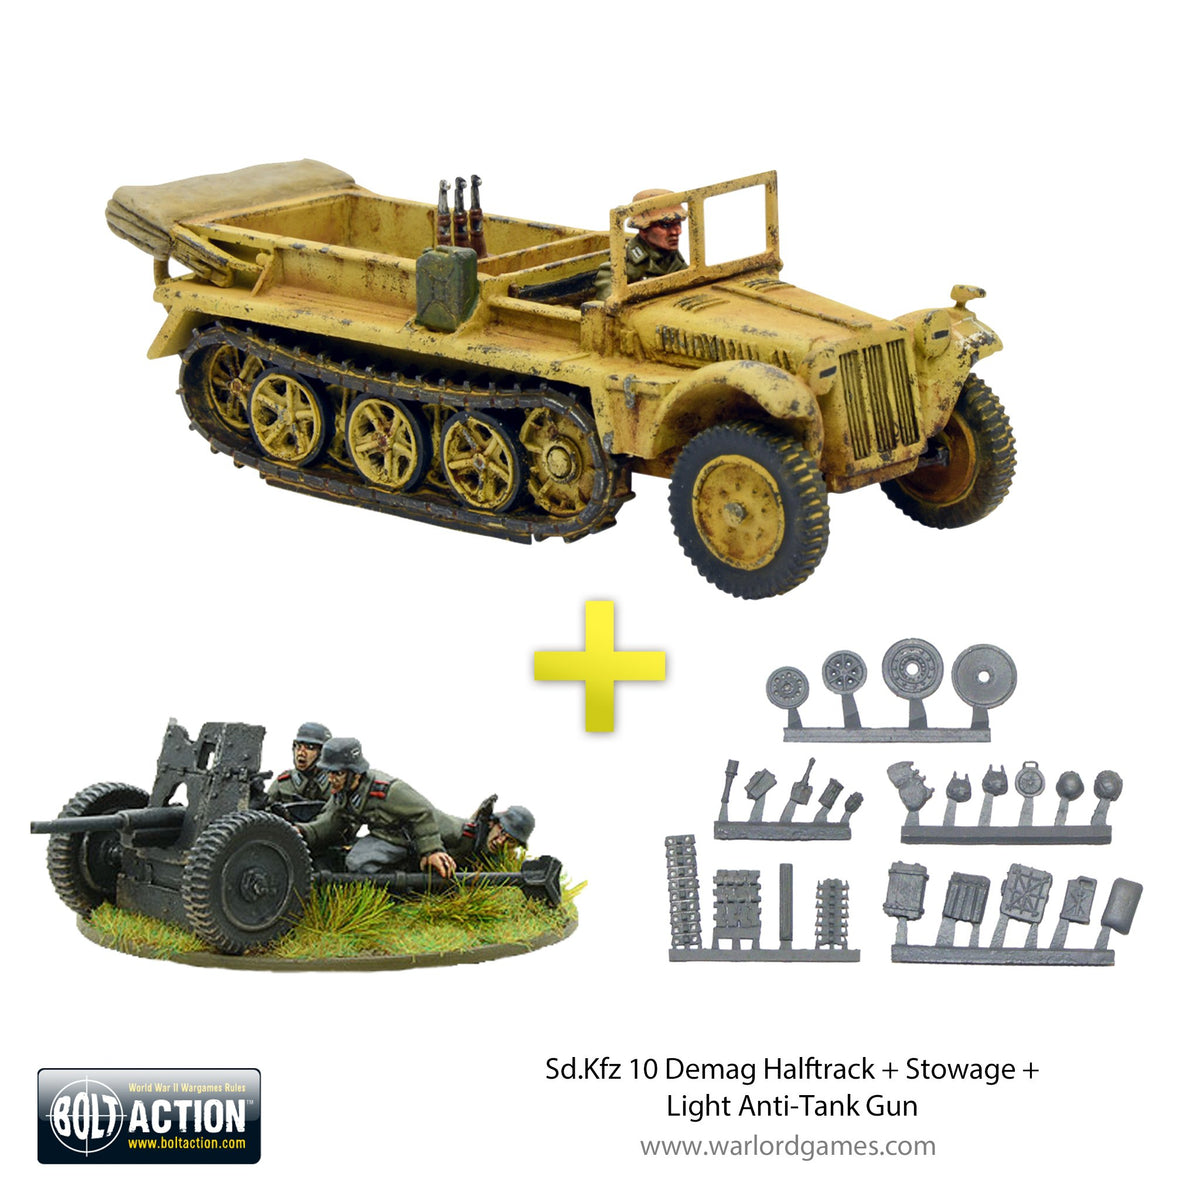 Sd.Kfz 10 Demag Halftrack + Stowage + Light Anti-Tank Gun